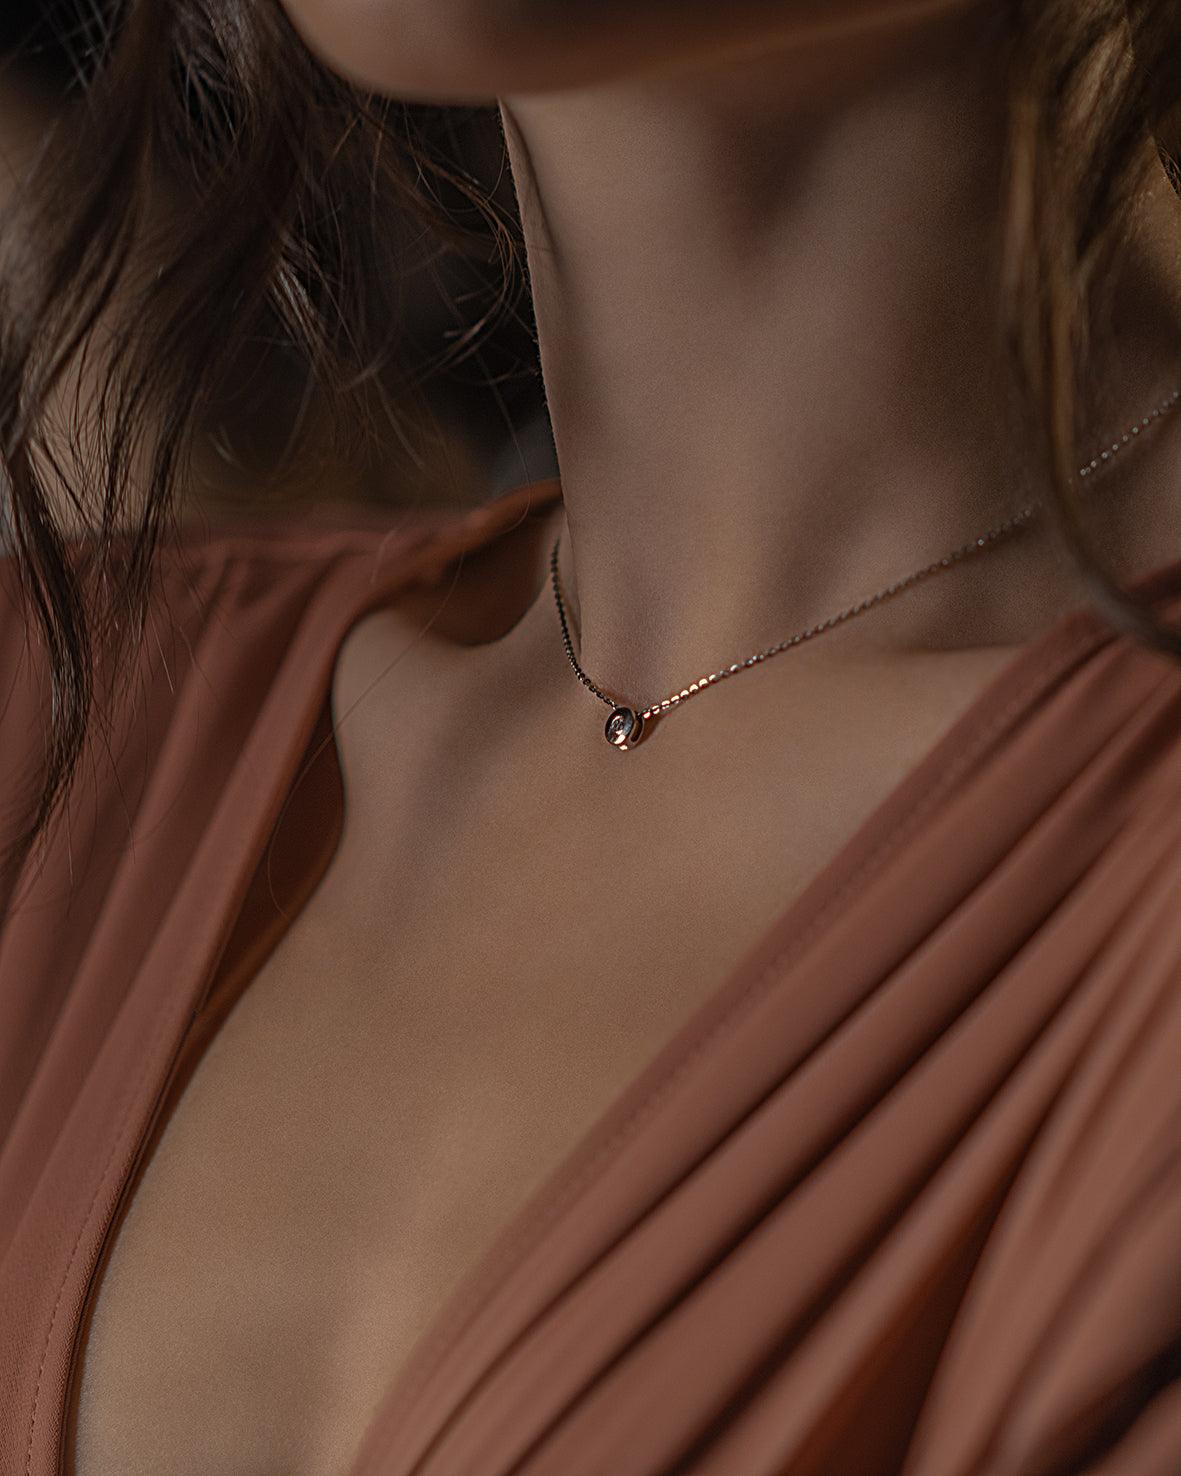 Sole necklace - Laura Lumiere